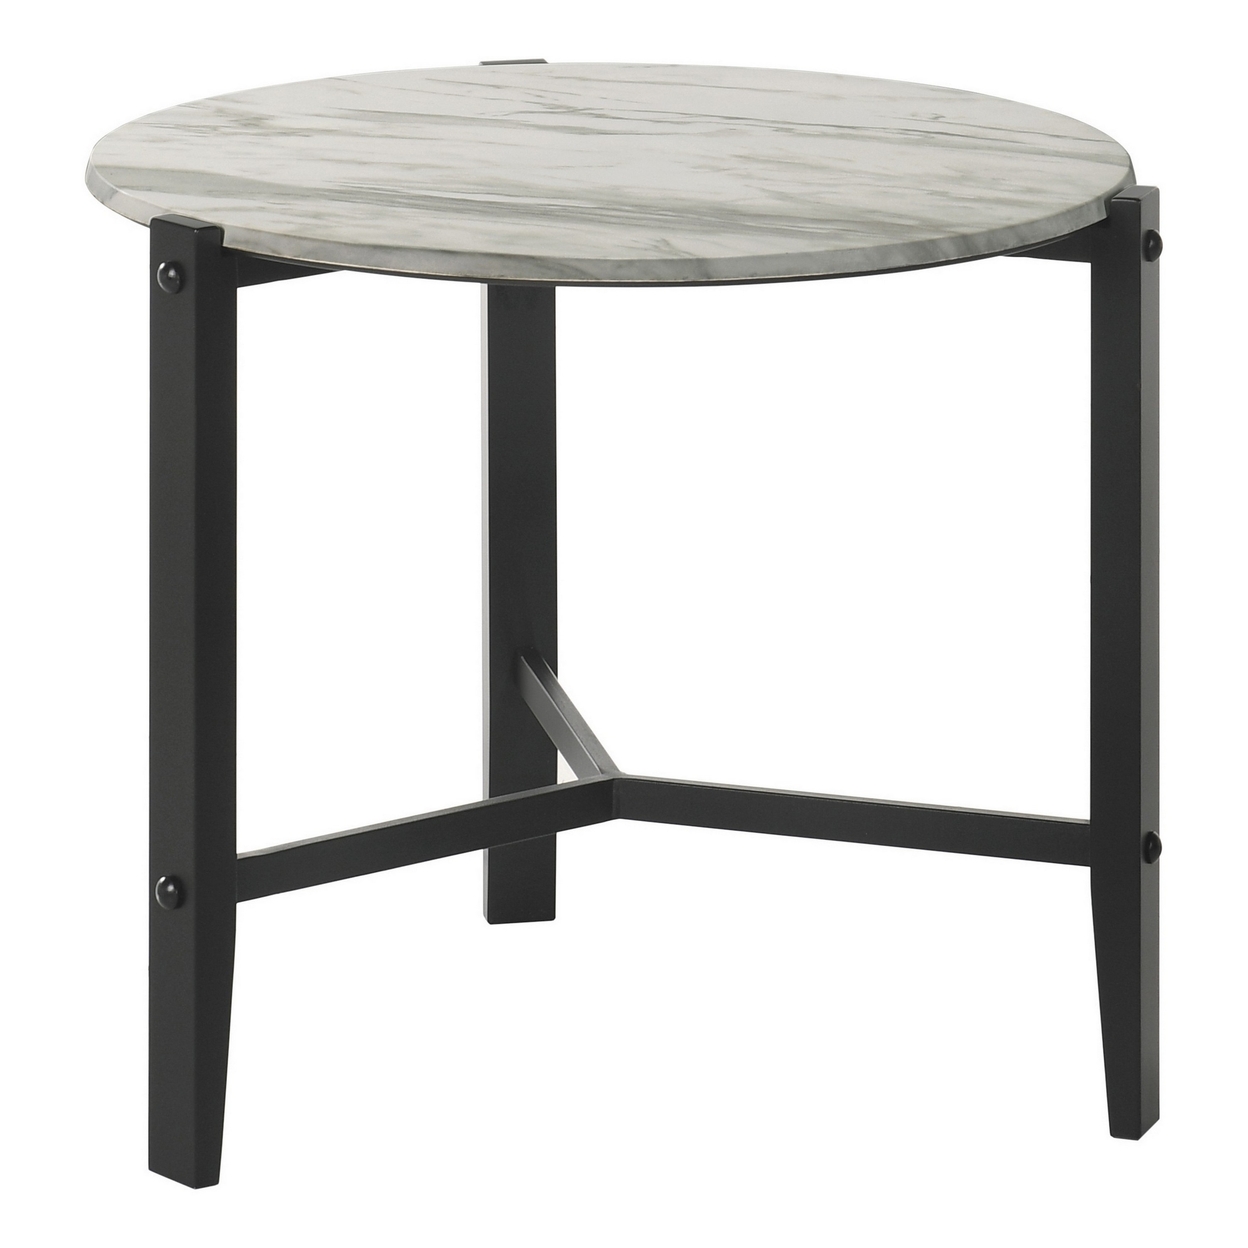 Zuko 24 Inch Round End Table, White Faux Marble Design, Black Legs- Saltoro Sherpi